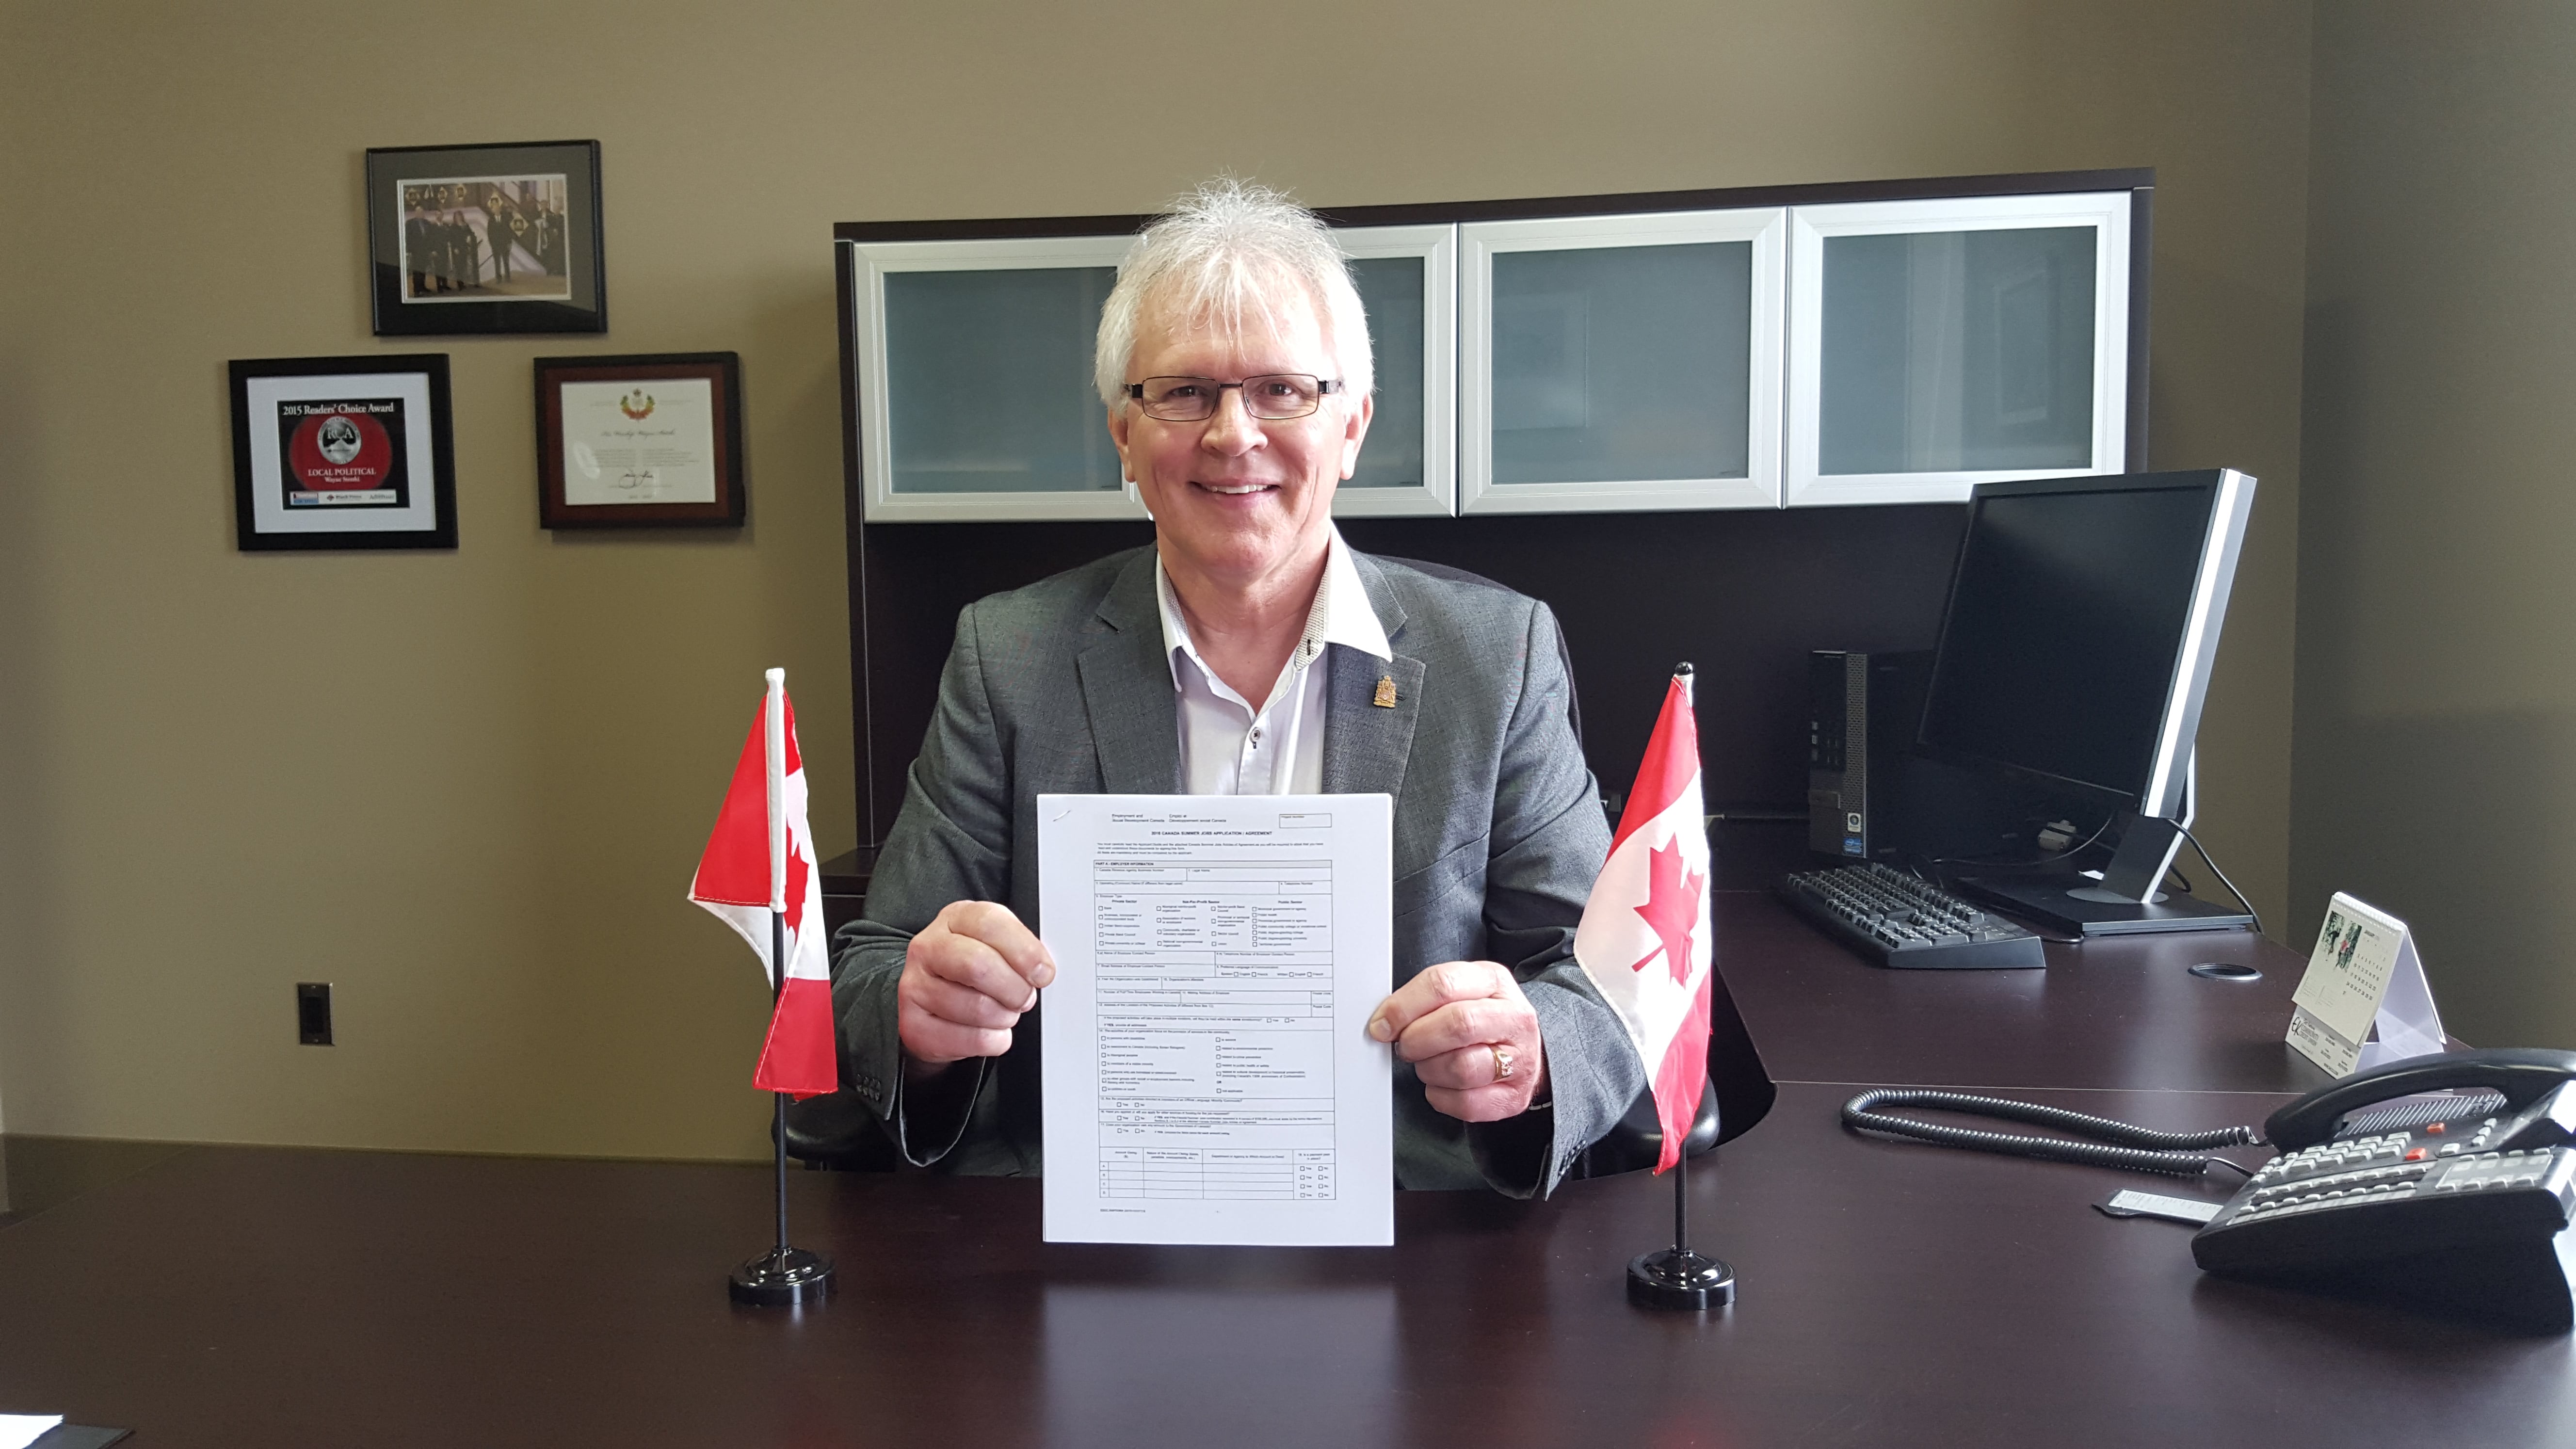 Stetski Announces Extended Deadline for Canada Summer Jobs Applications